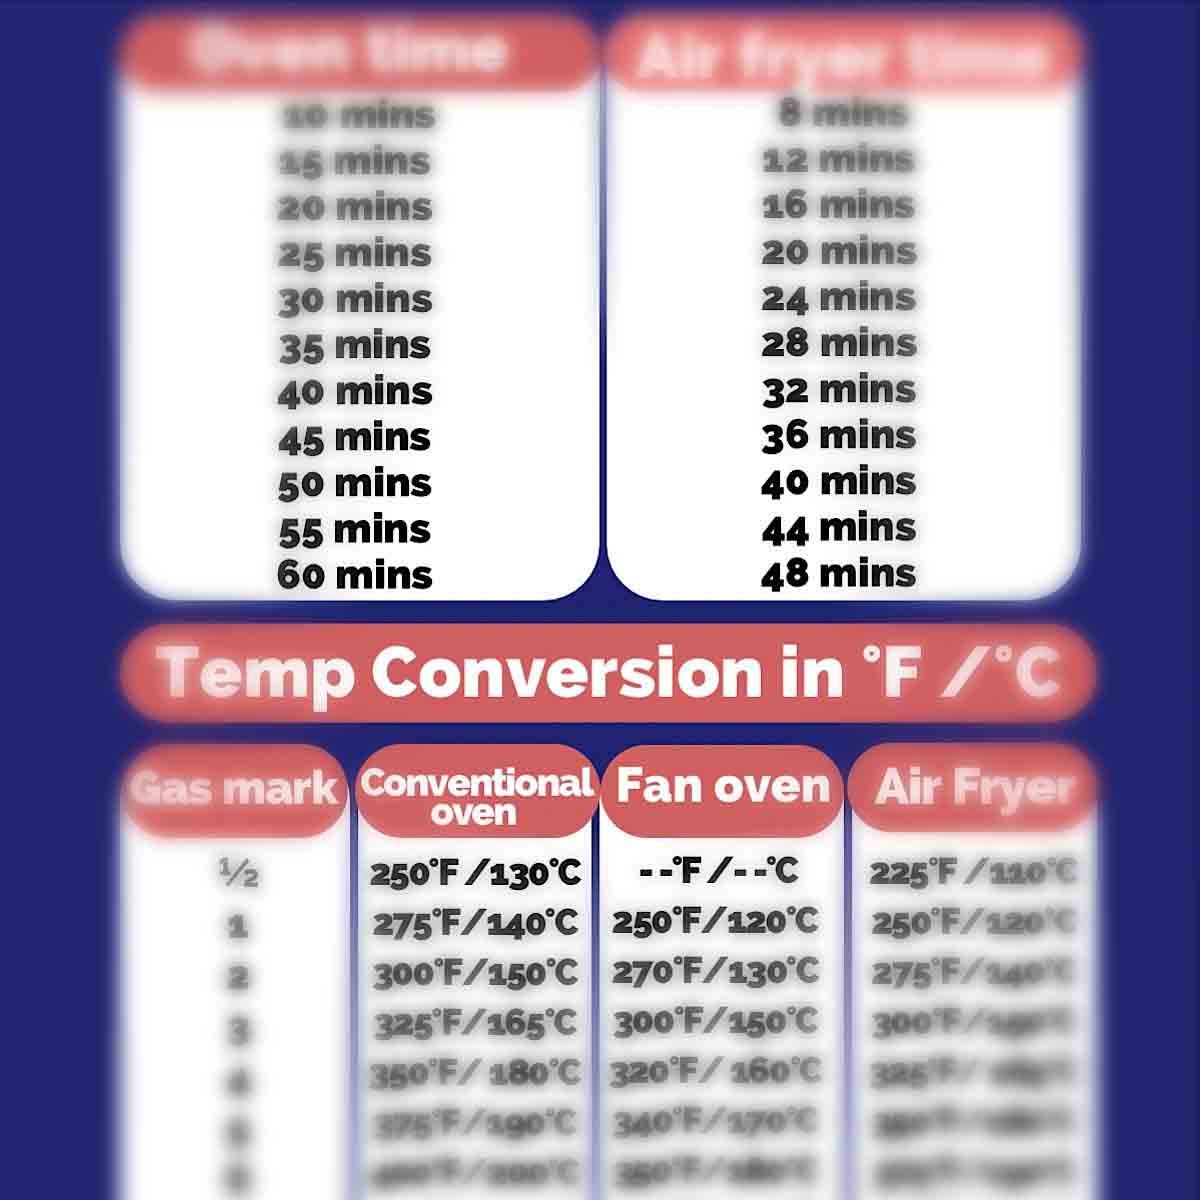 convert 350f to fan oven